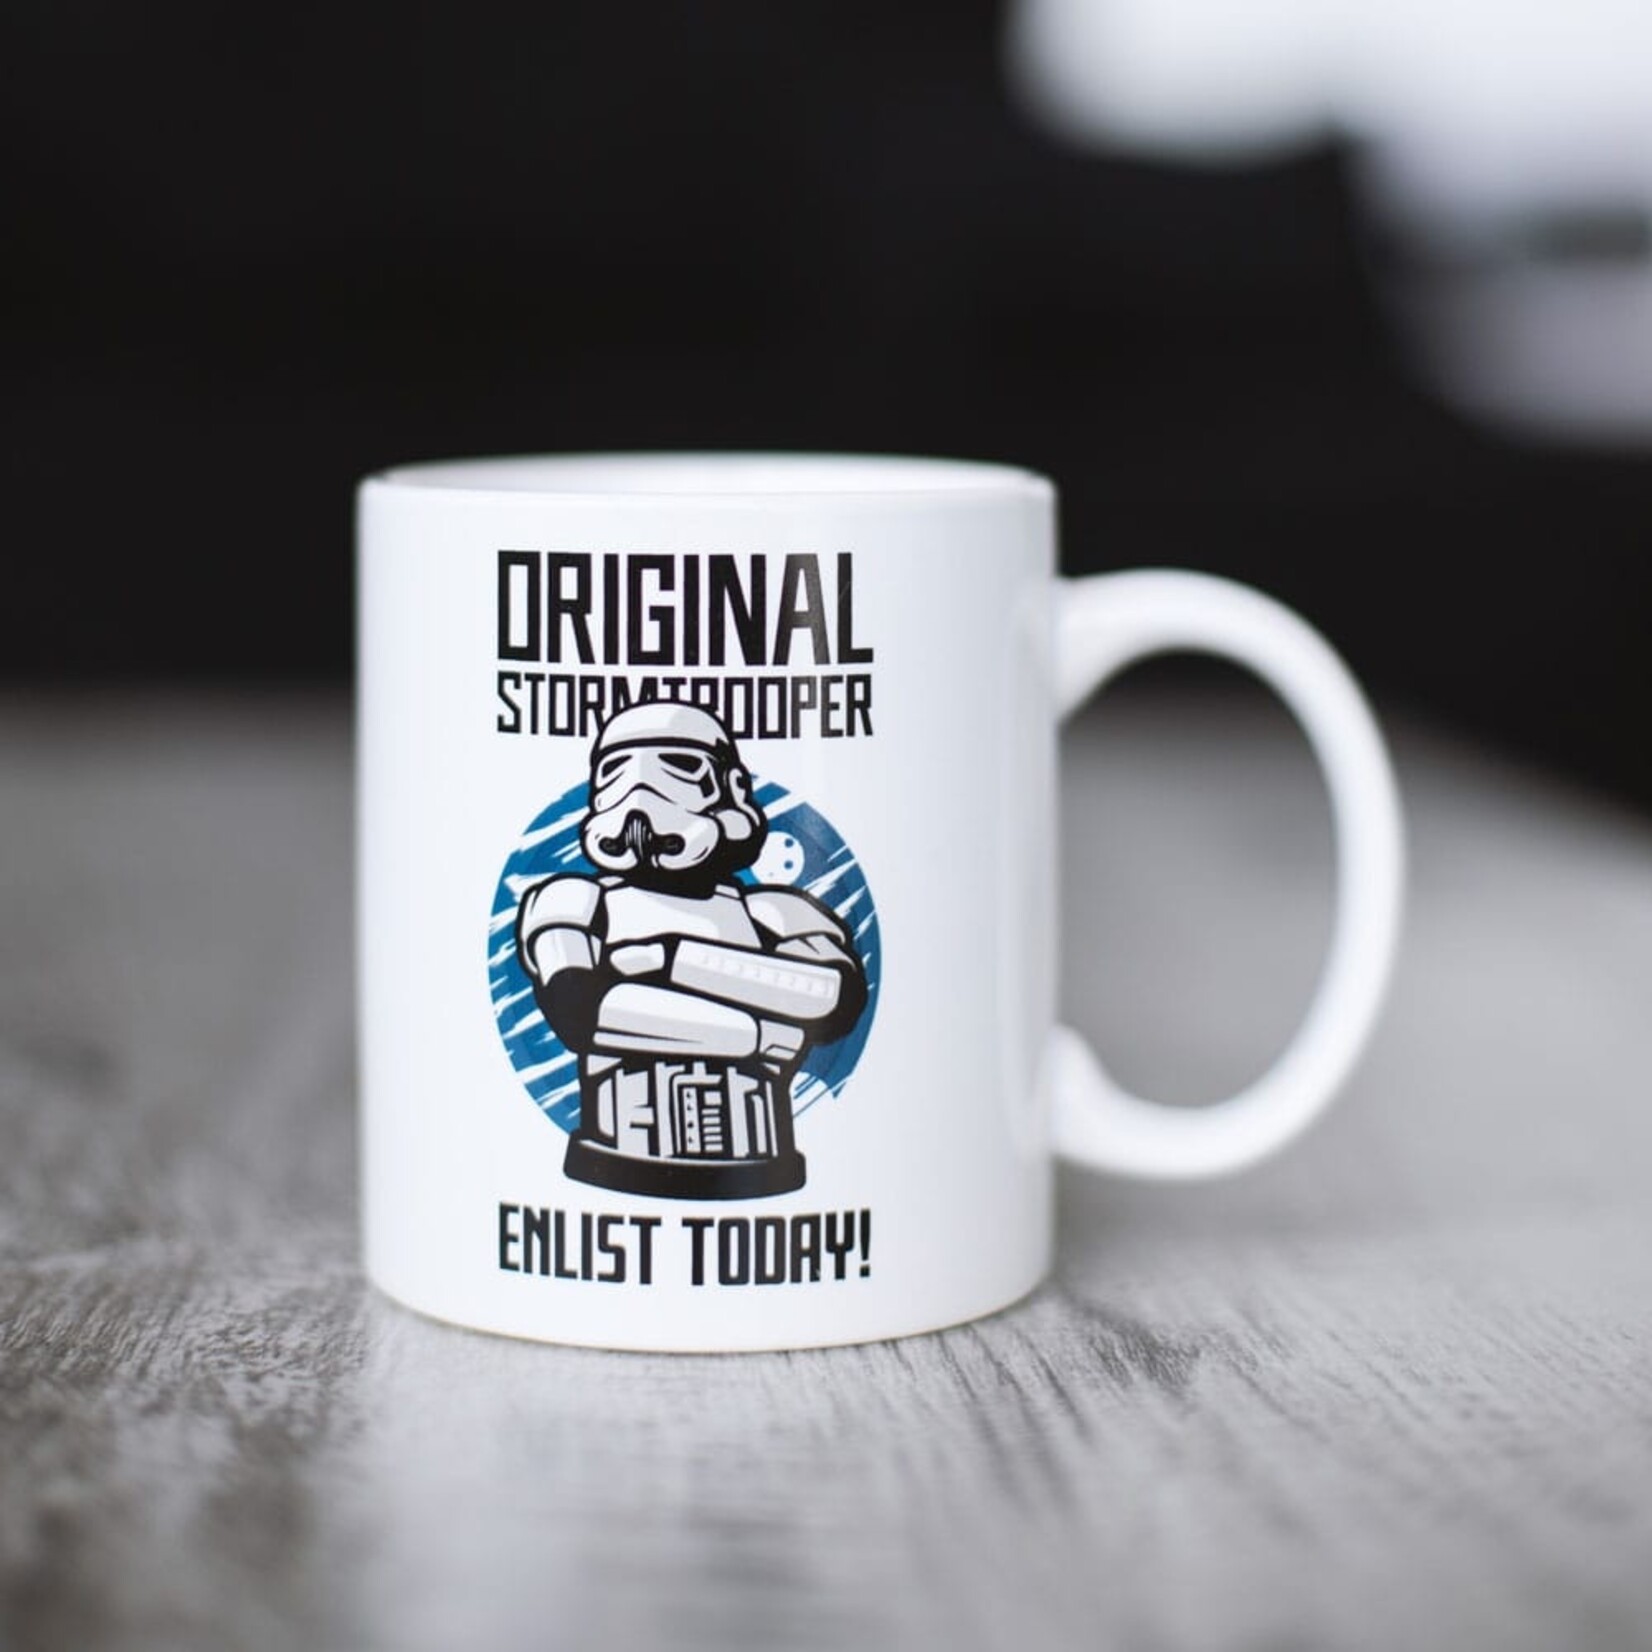 Thumbs Up! Thumbs Up! Star Wars Original Stormtrooper Mug Enlist Today 330 ml